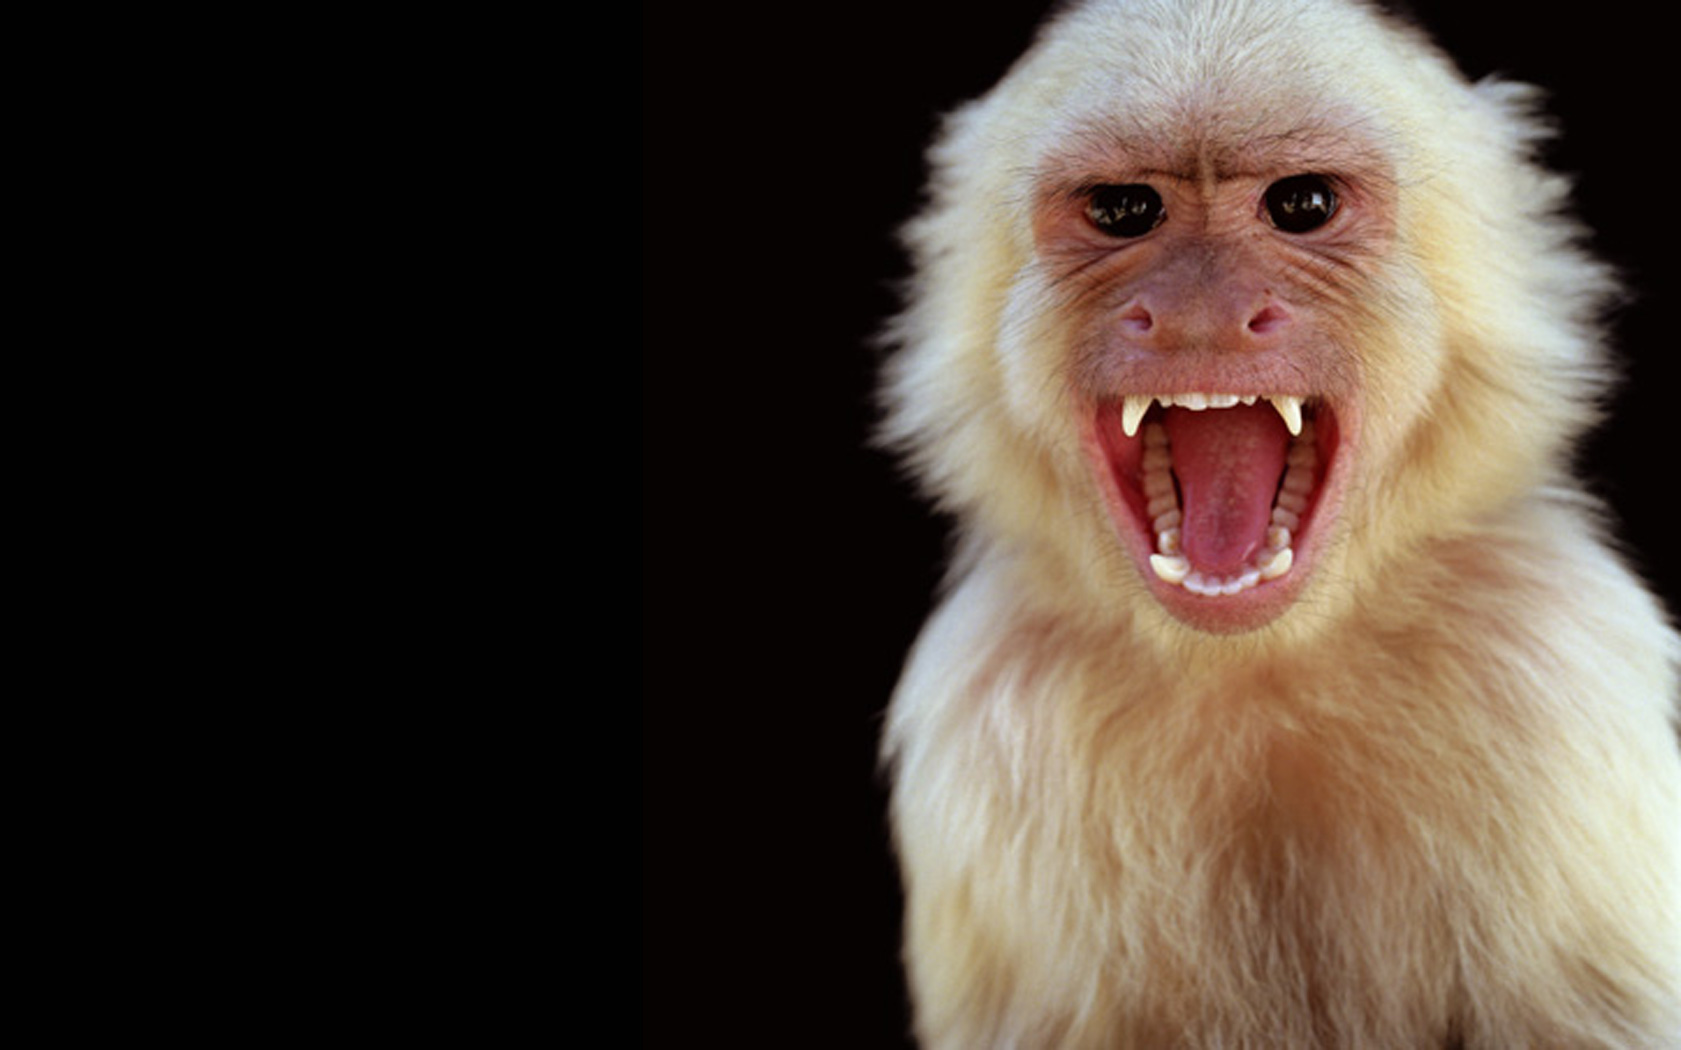 Rupee Capuchin Monkey photo shoot